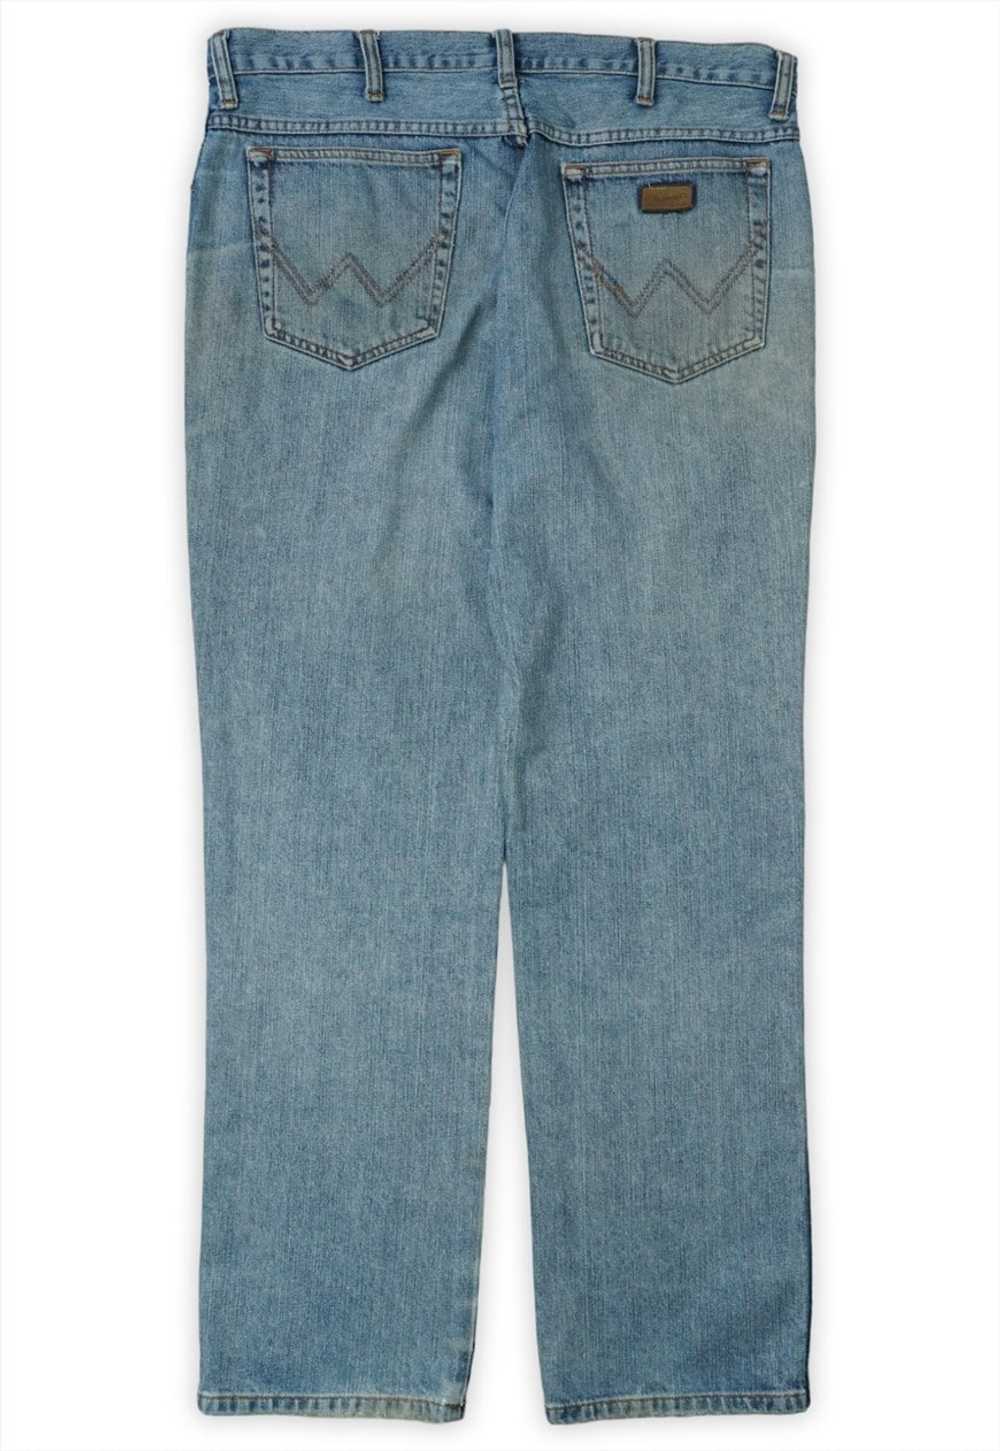 Vintage Wrangler Texas Blue Jeans Womens - image 2